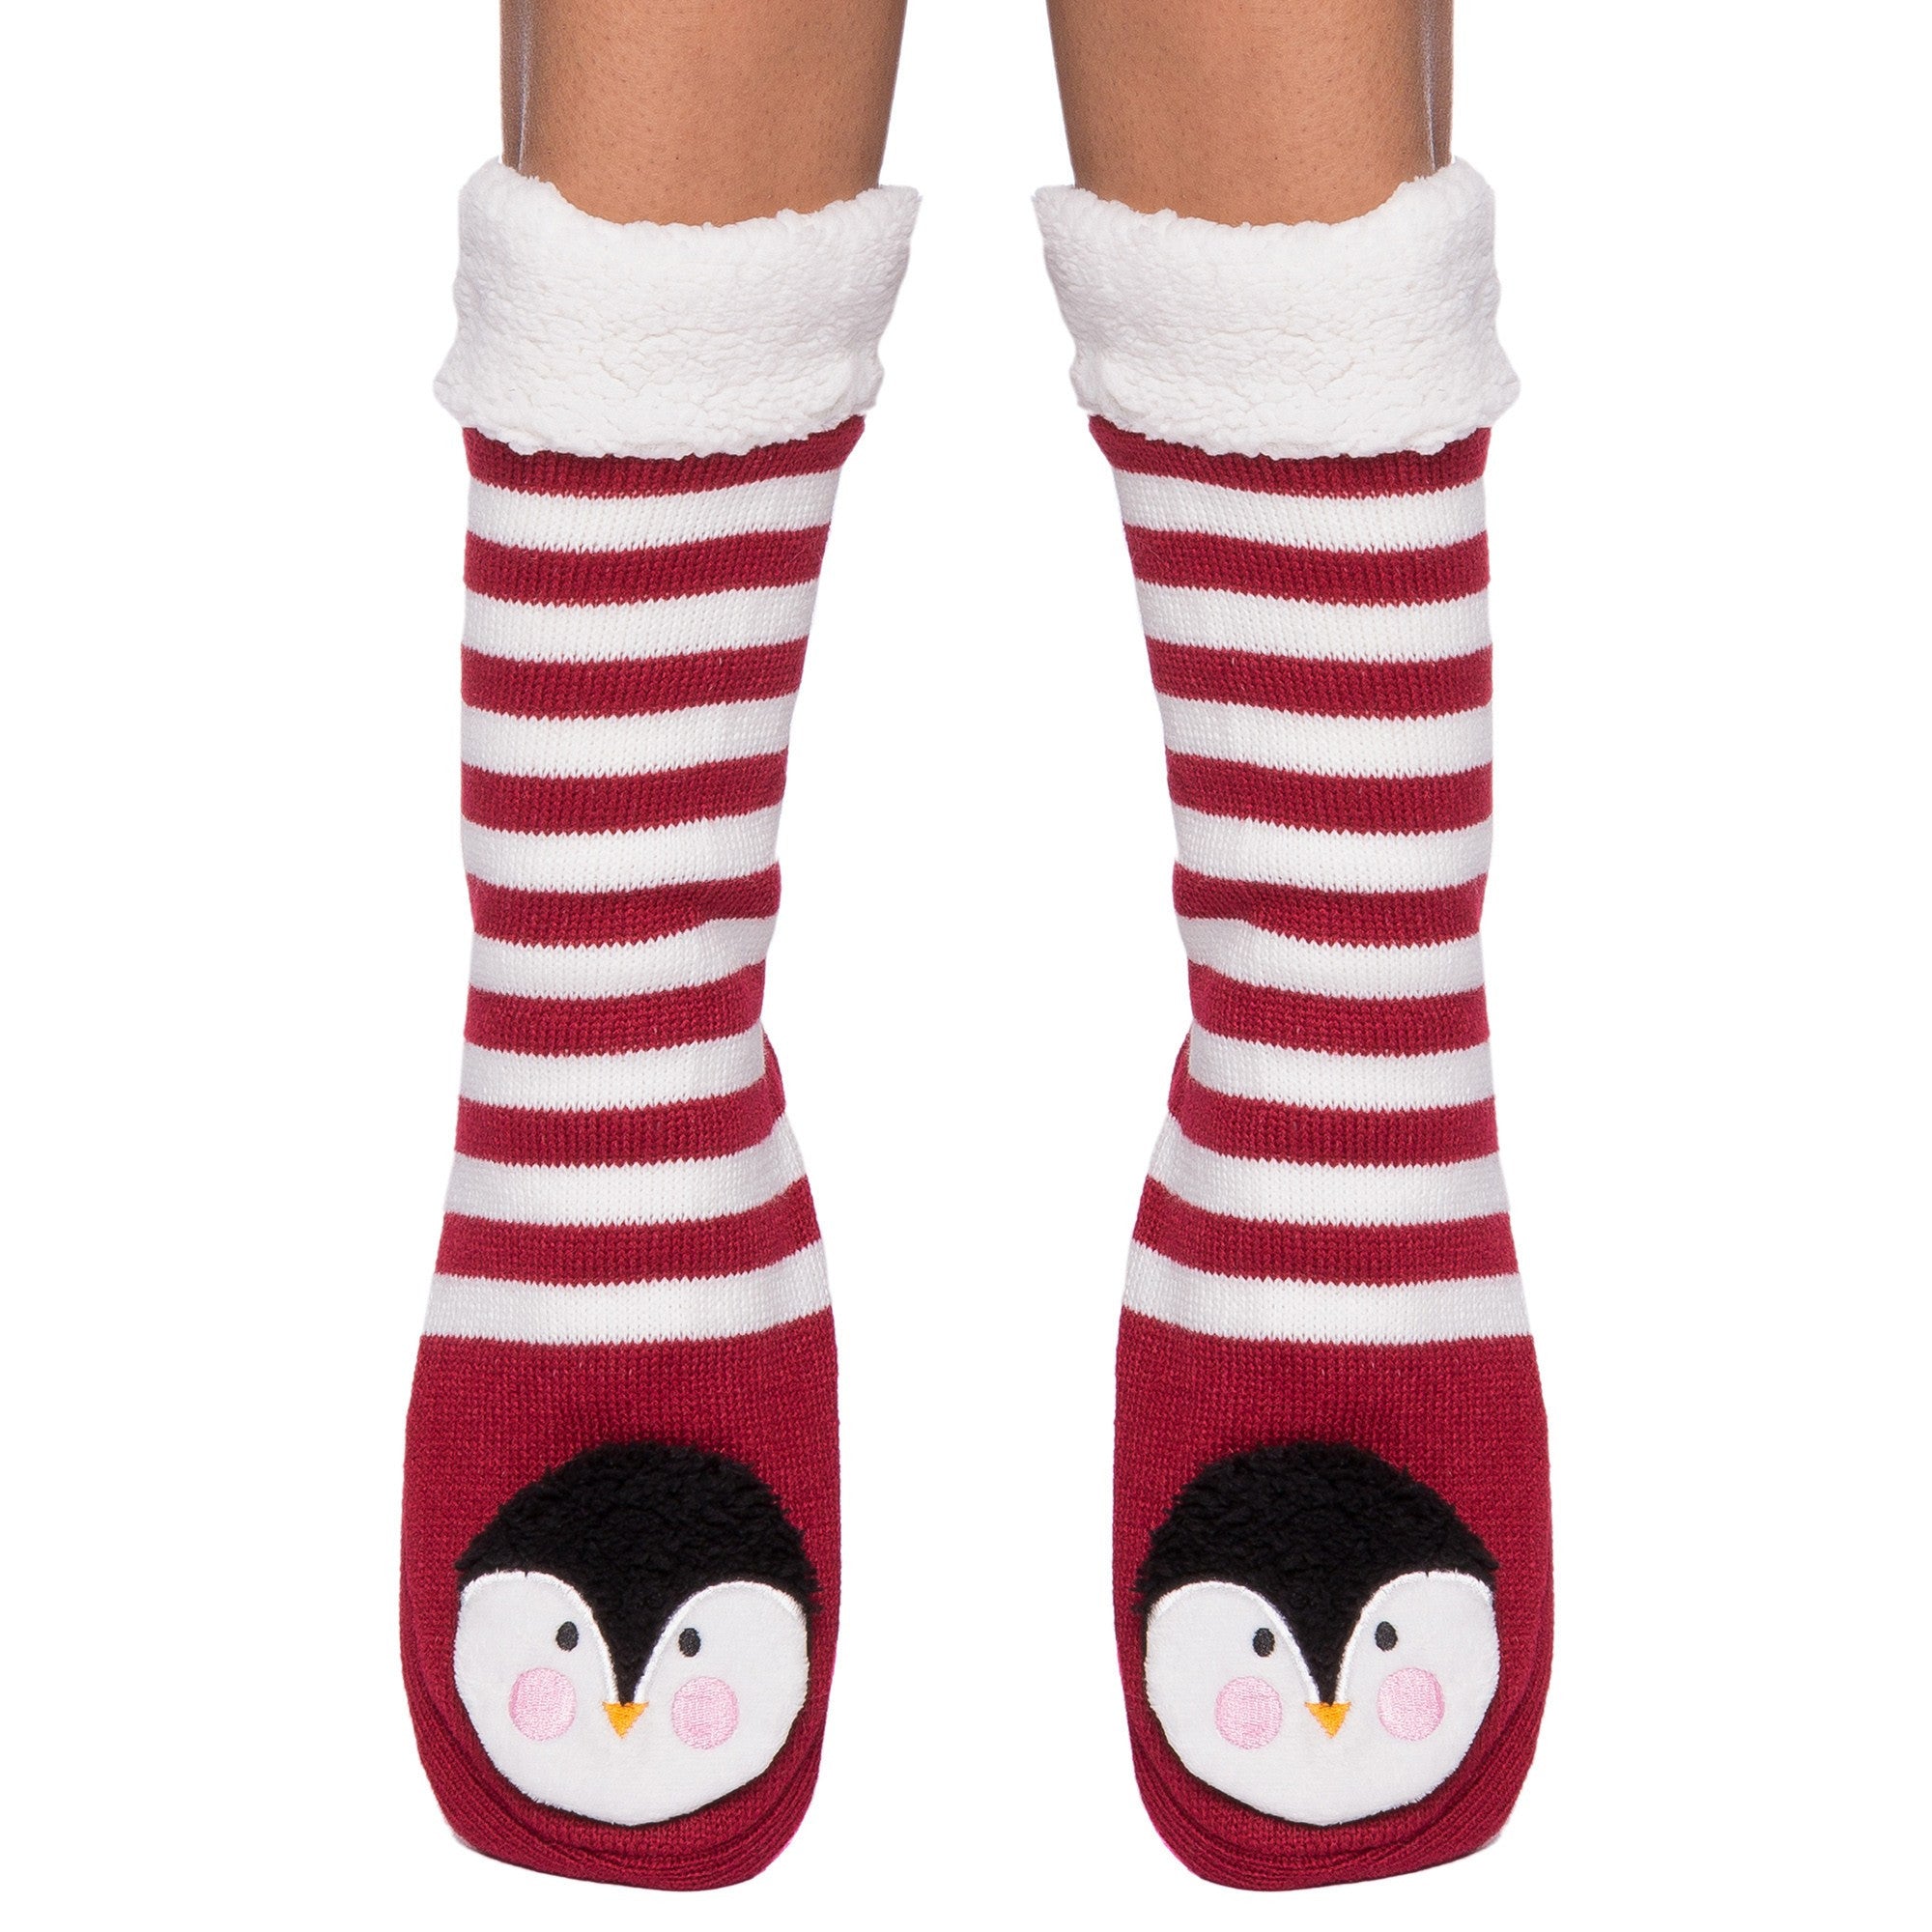 Women's Cute Knit Animal Face Slipper Socks